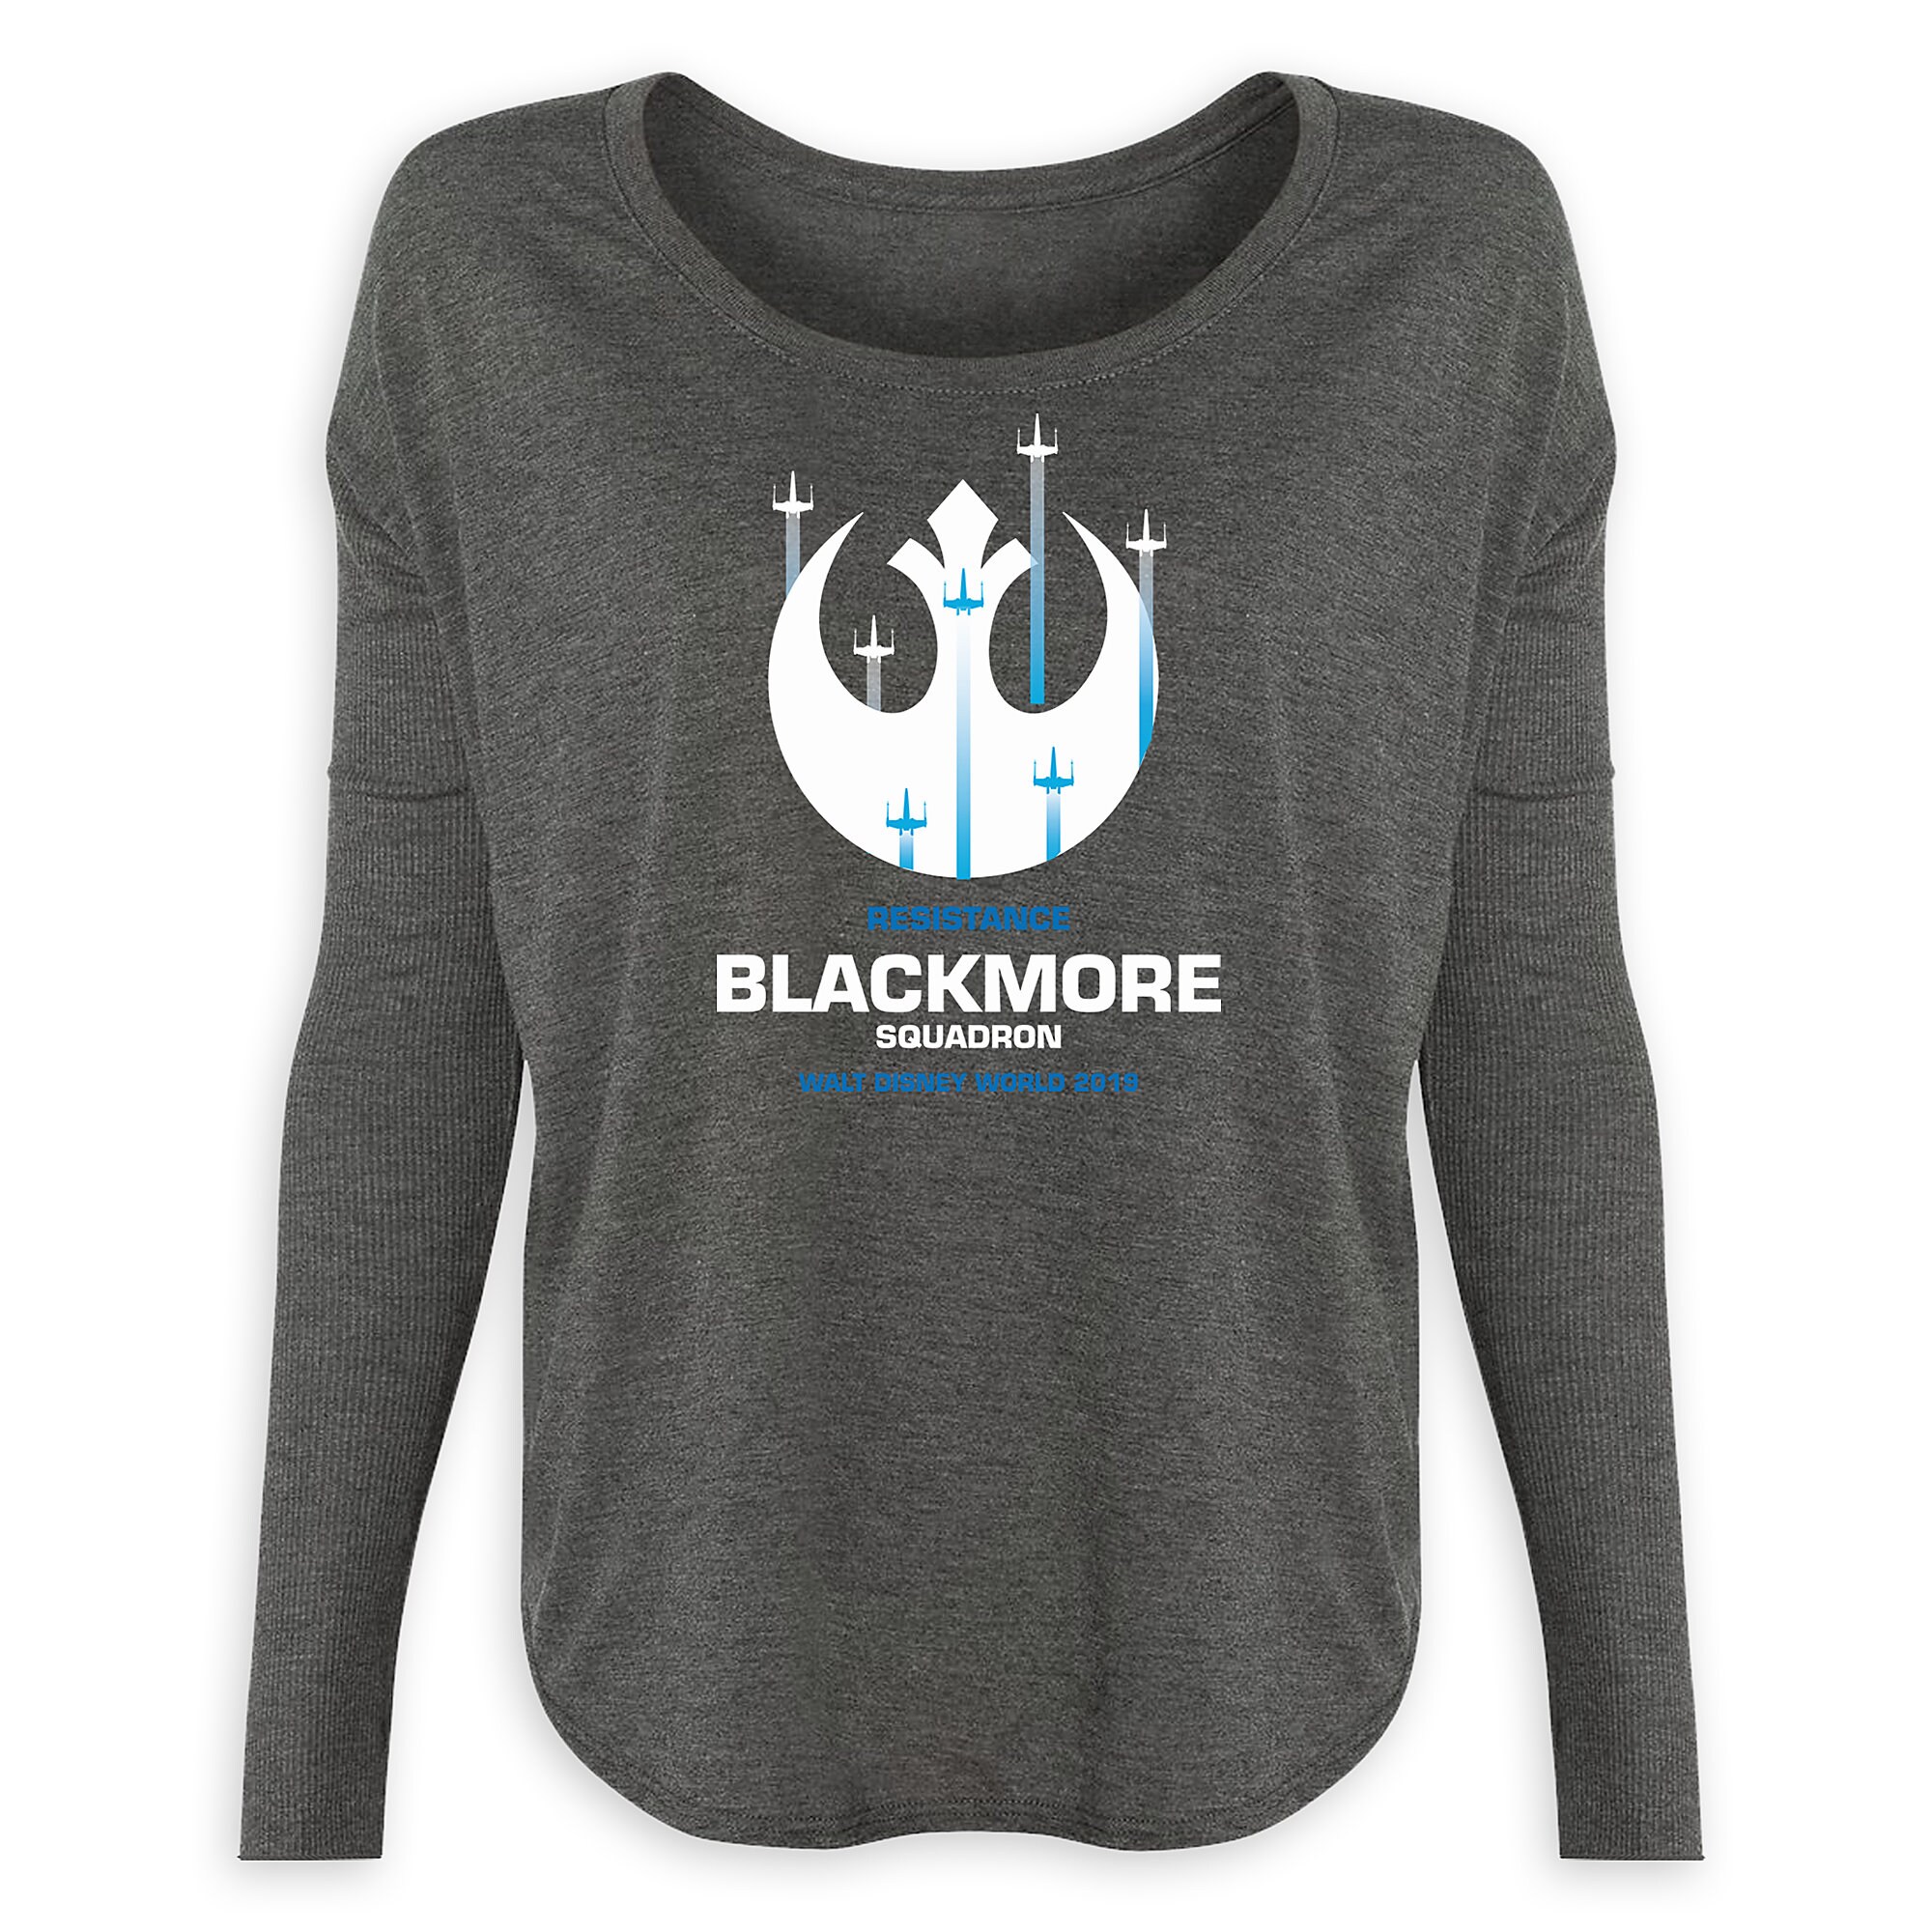 Women's Star Wars Resistance Squadron Long Sleeve T-Shirt - Walt Disney World - Customized